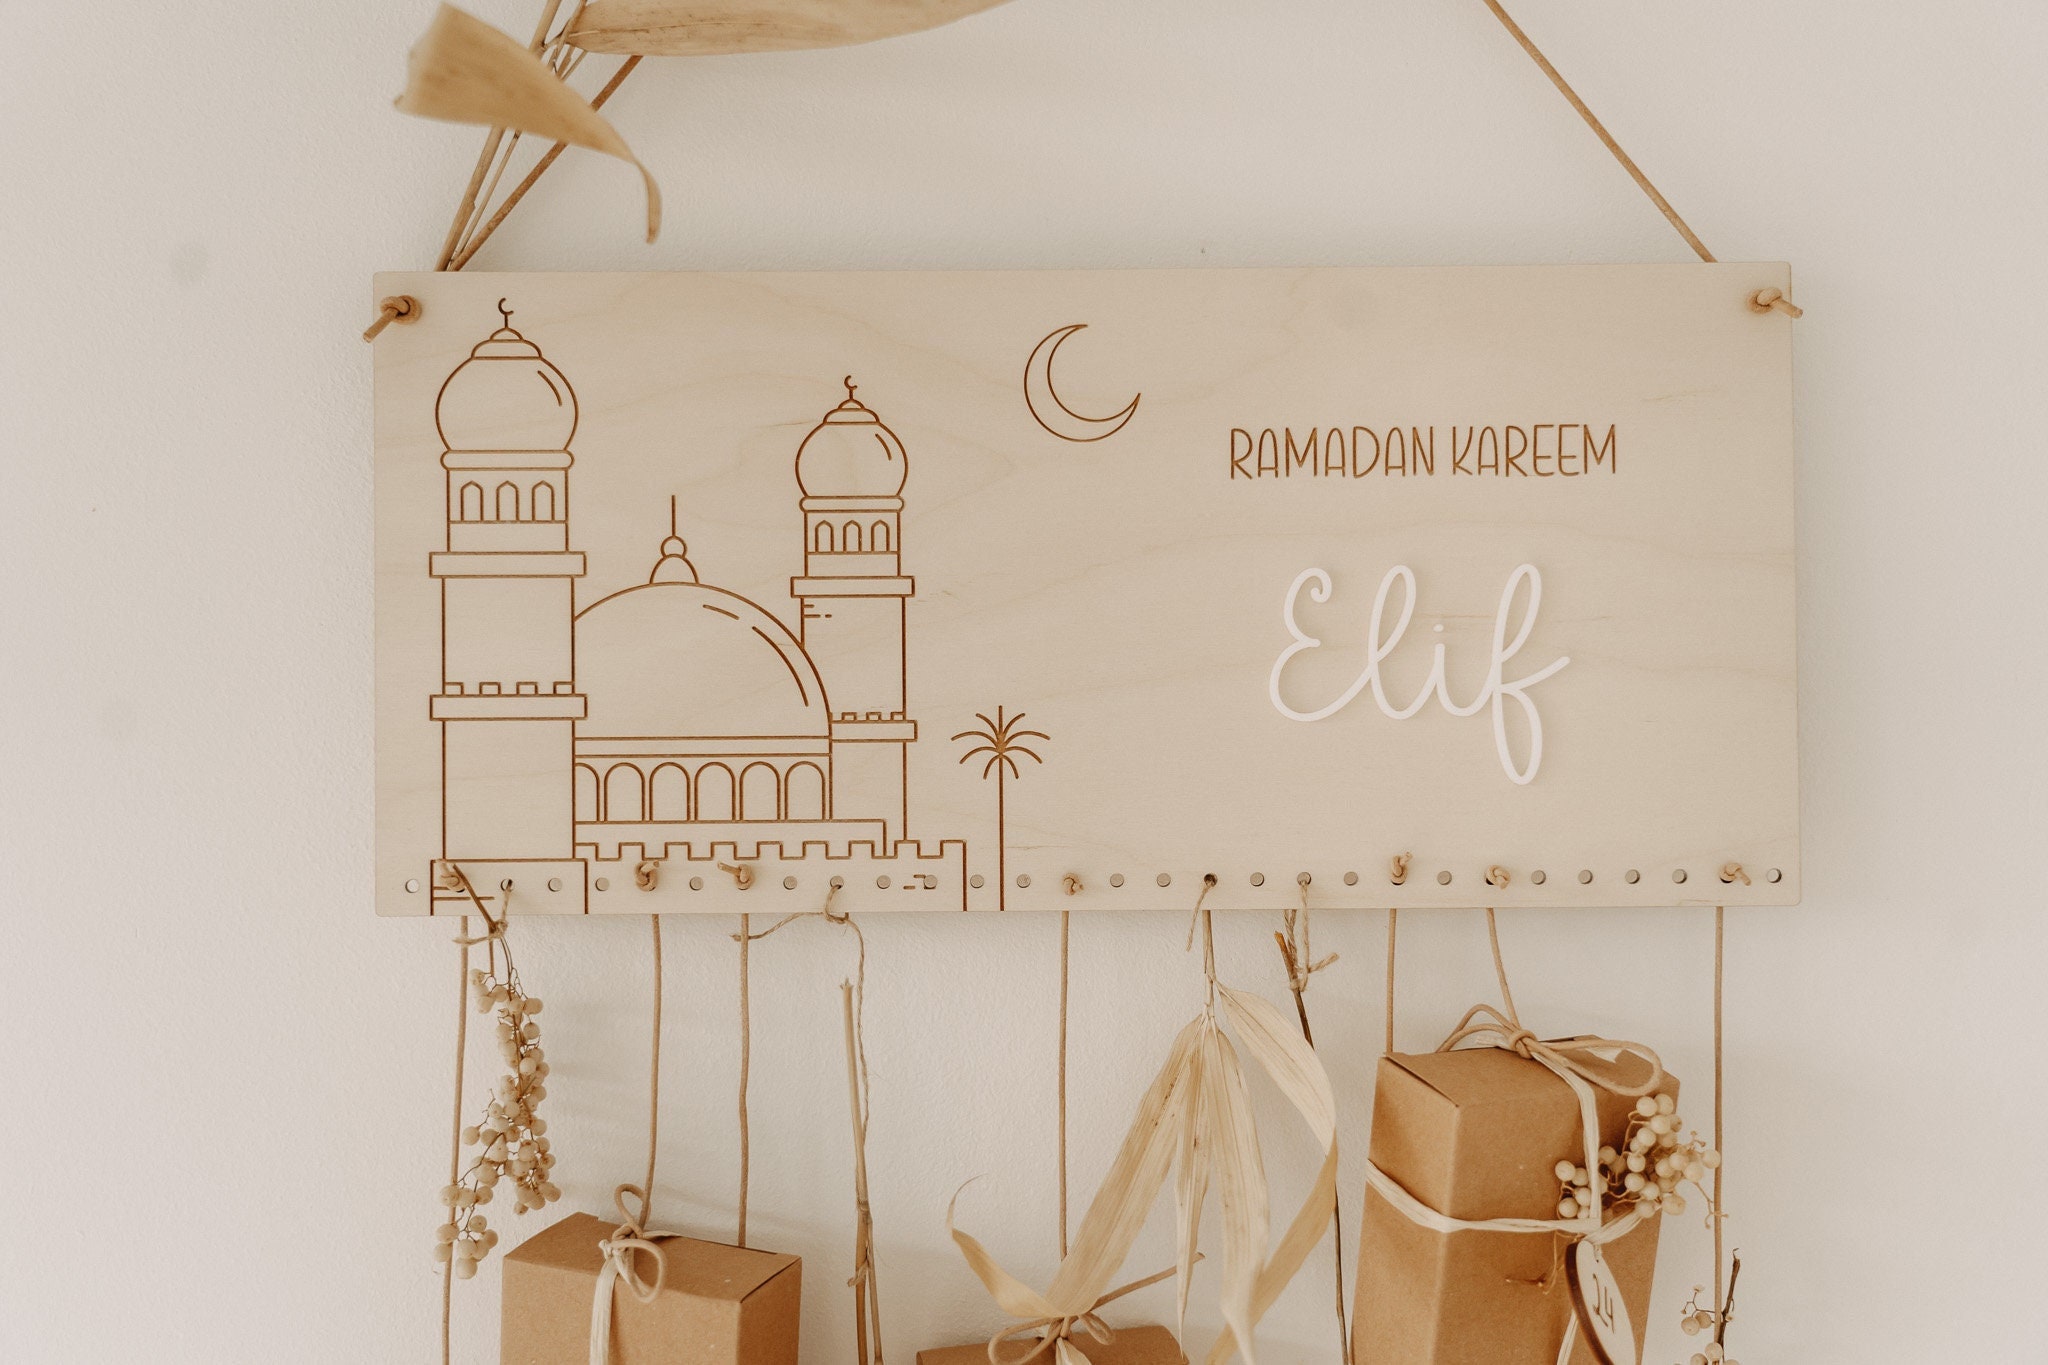 Personalisierter Ramadan Kalender mit eigenem Namen